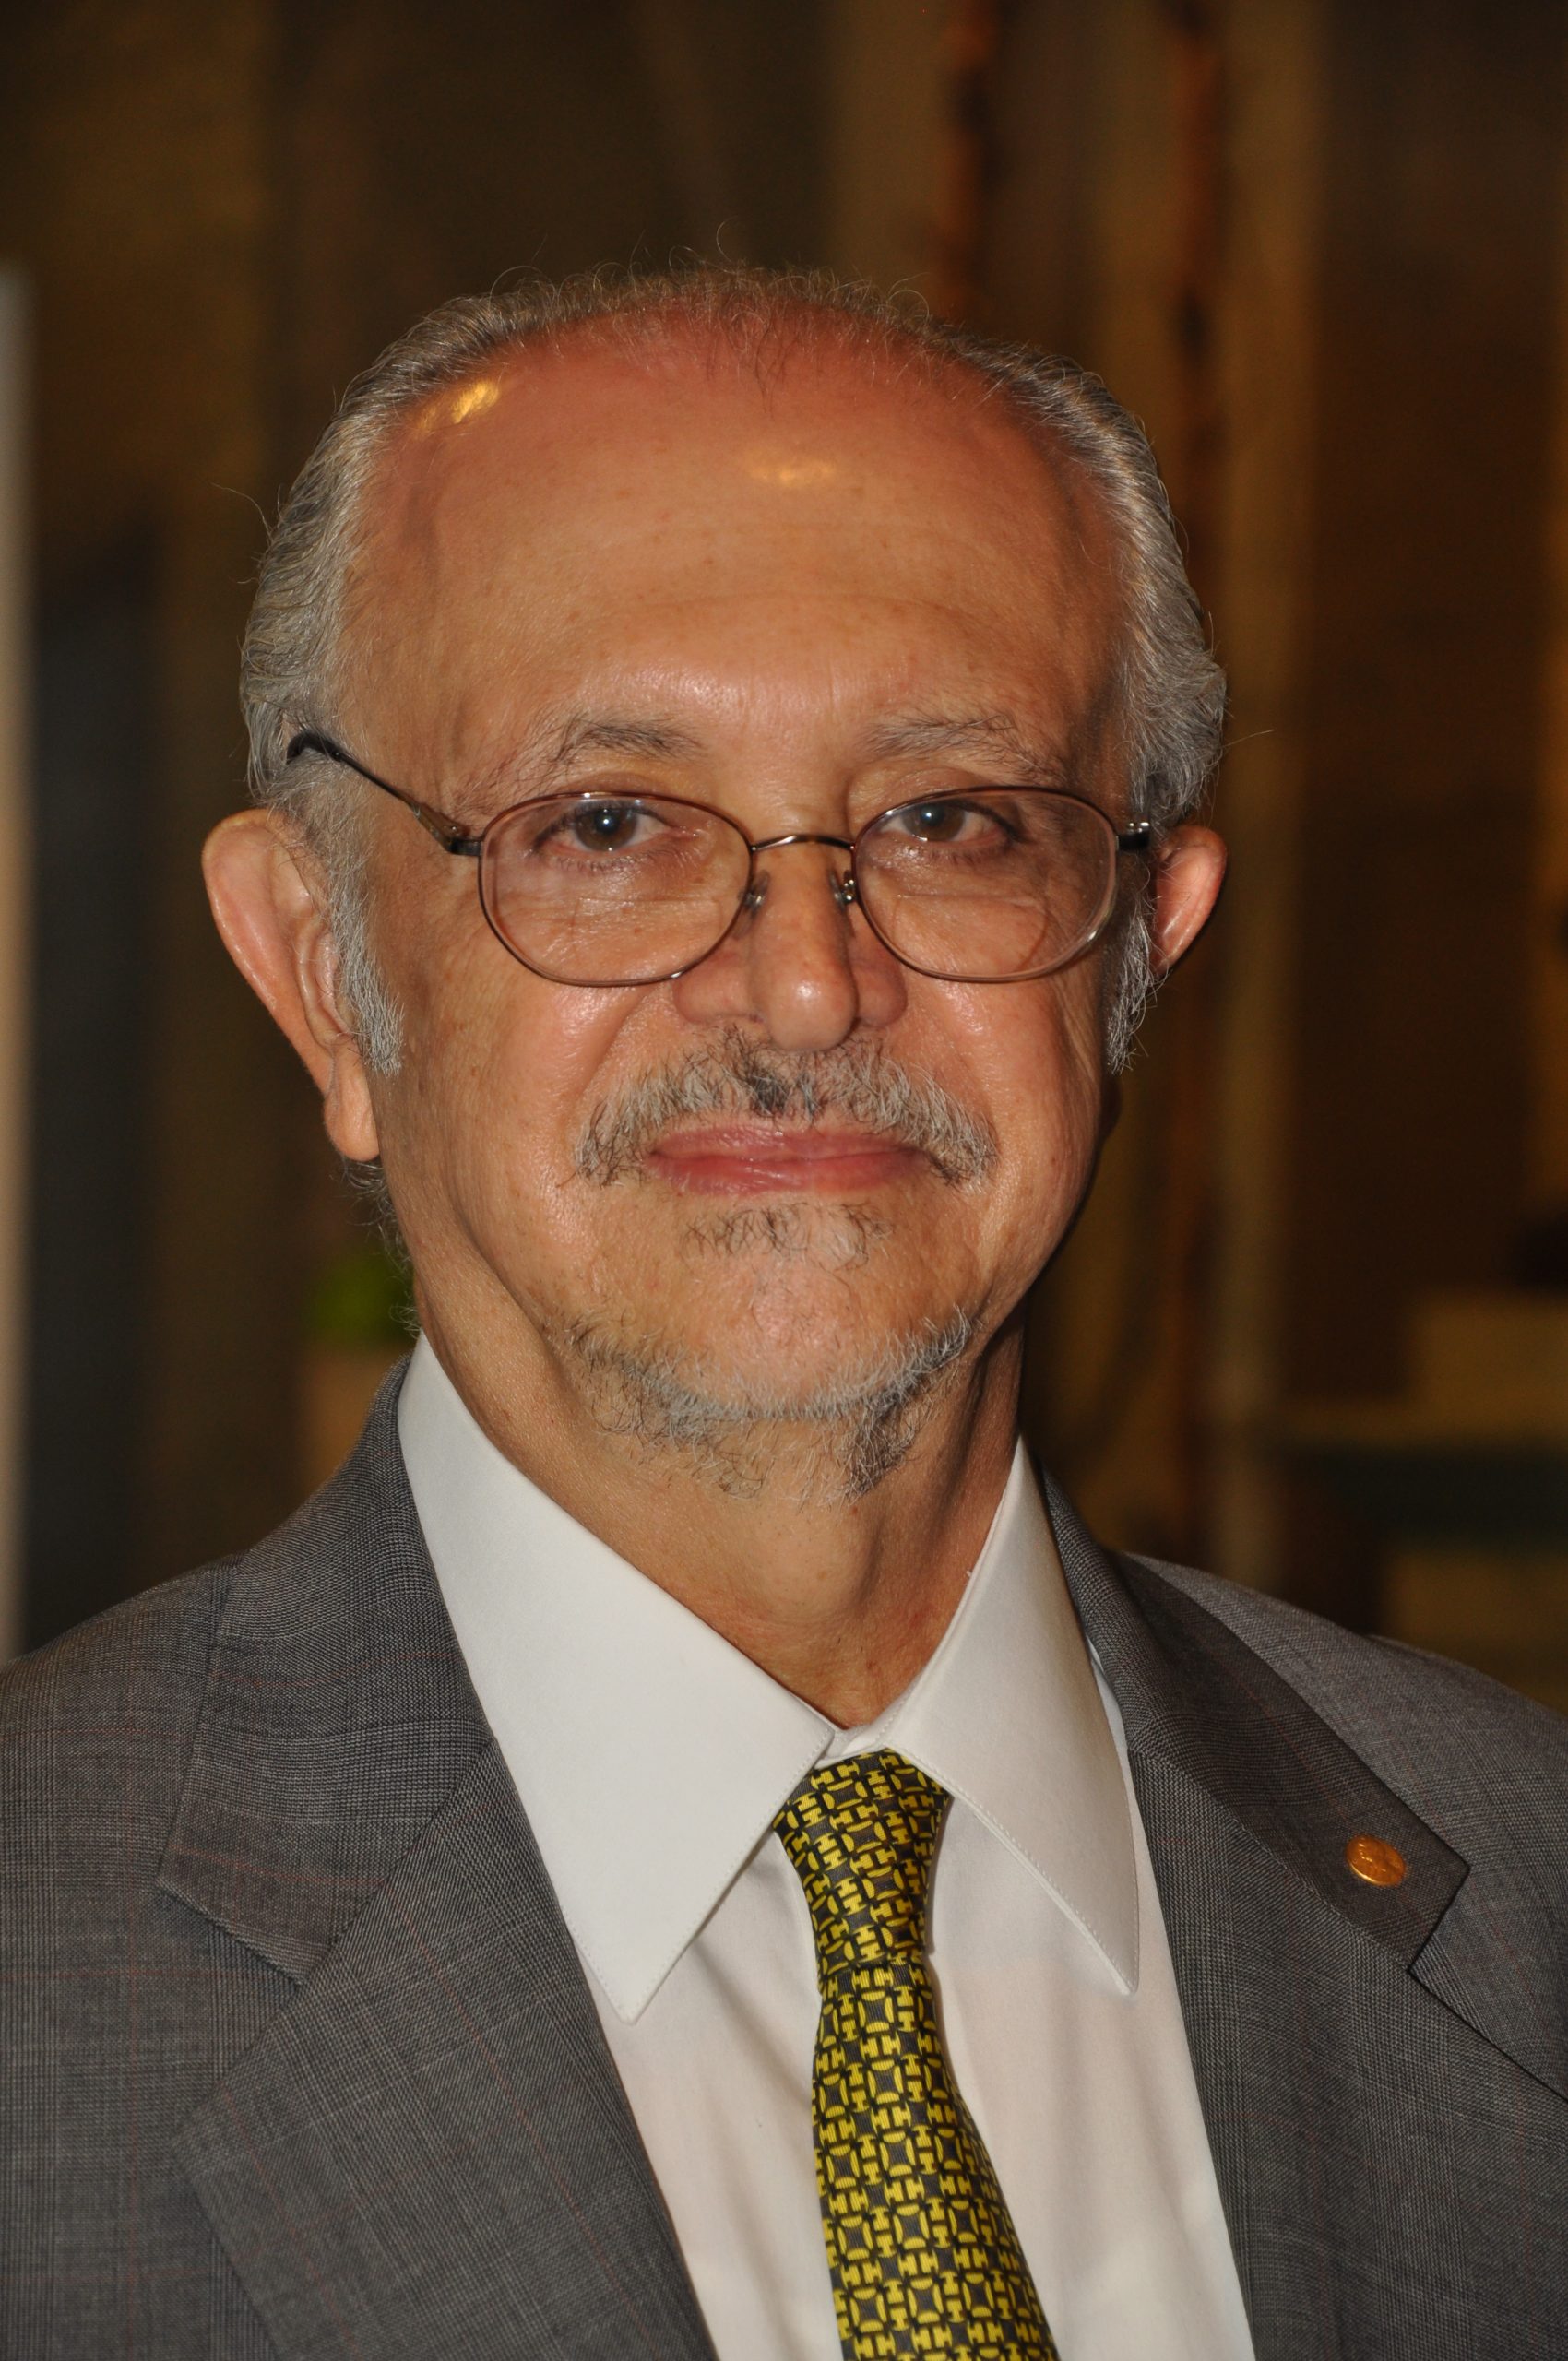 A portrait of Dr. Mario J. Molina